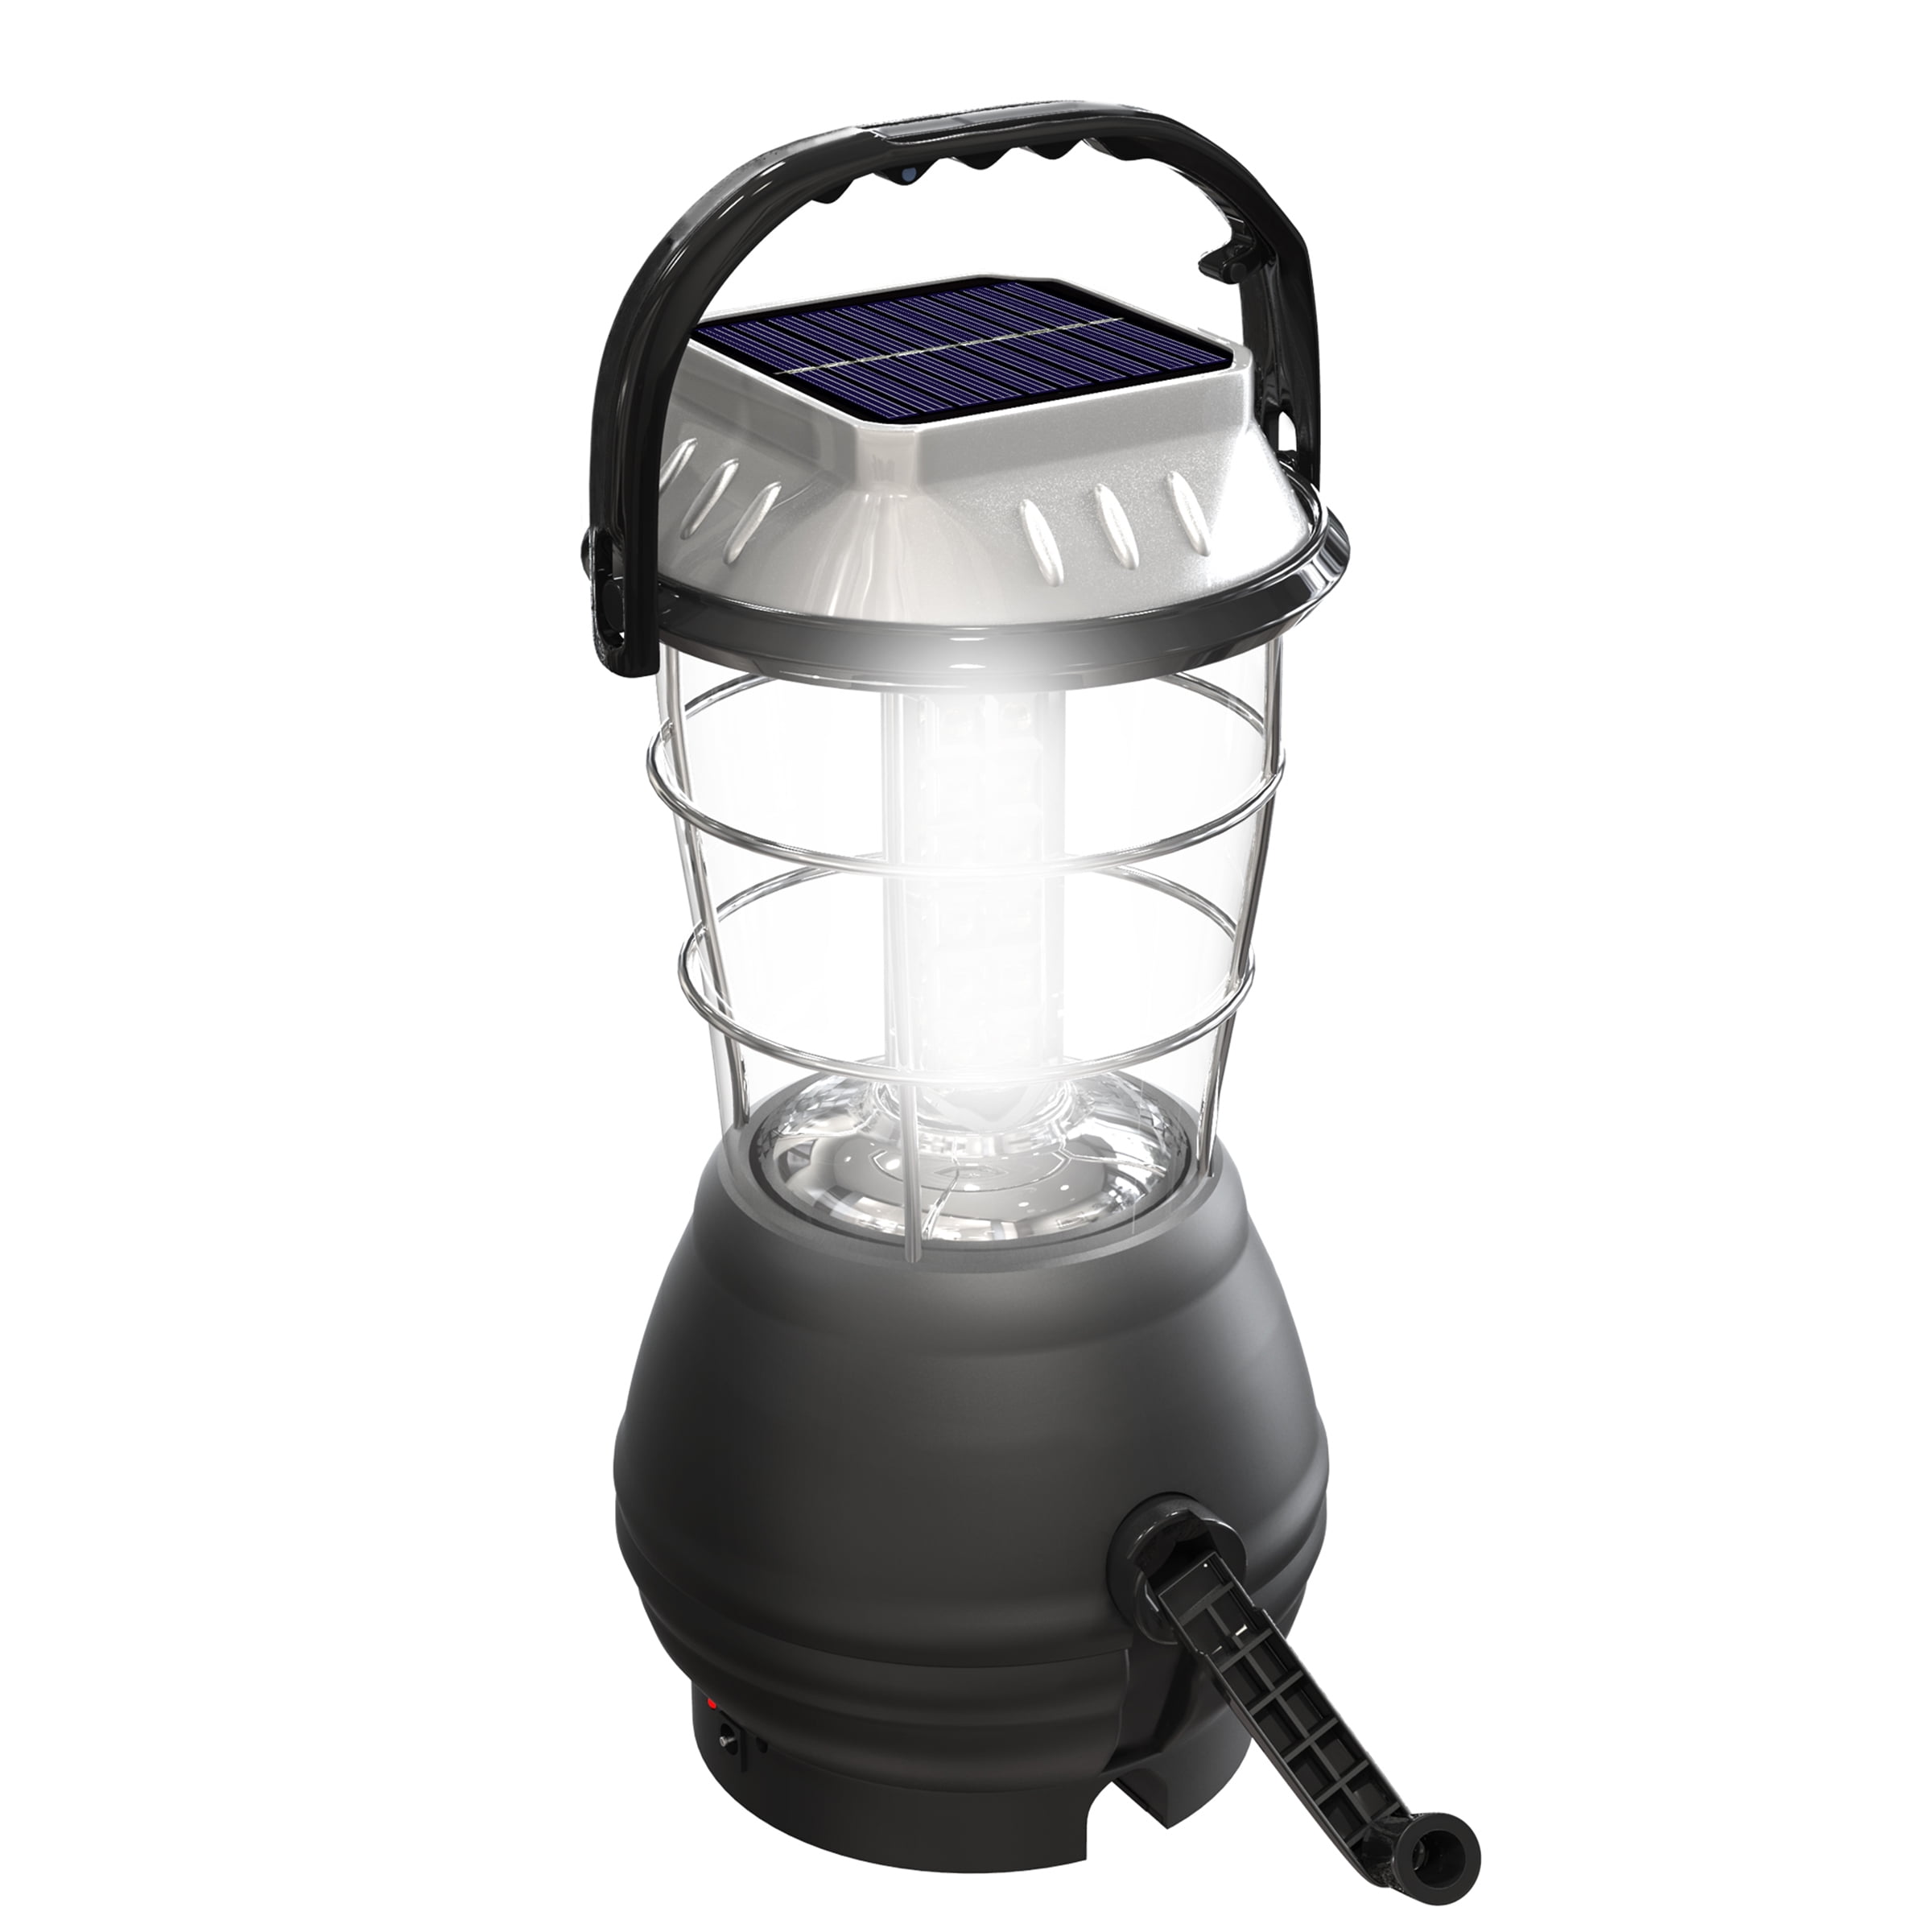 4pcs Outdoor 36 LED Solar Powered Dynamo Camping Lantern For Hiking Emergency BP 